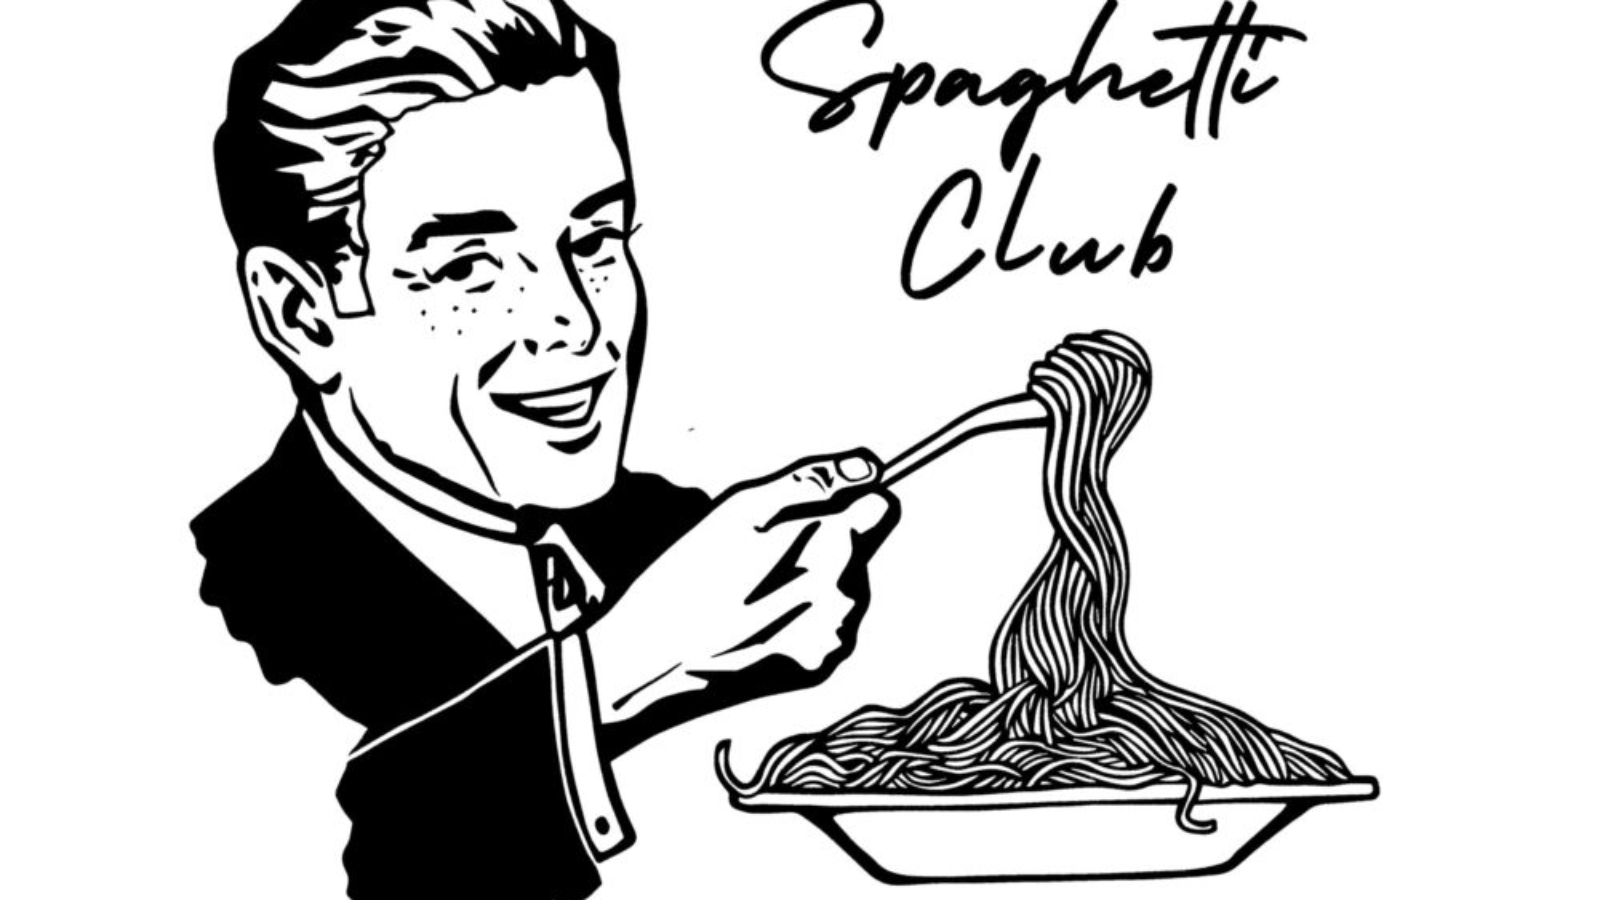 SPG001 ARTWORK Various Artists - Spaghetti Club 001 - Spaghetti Club